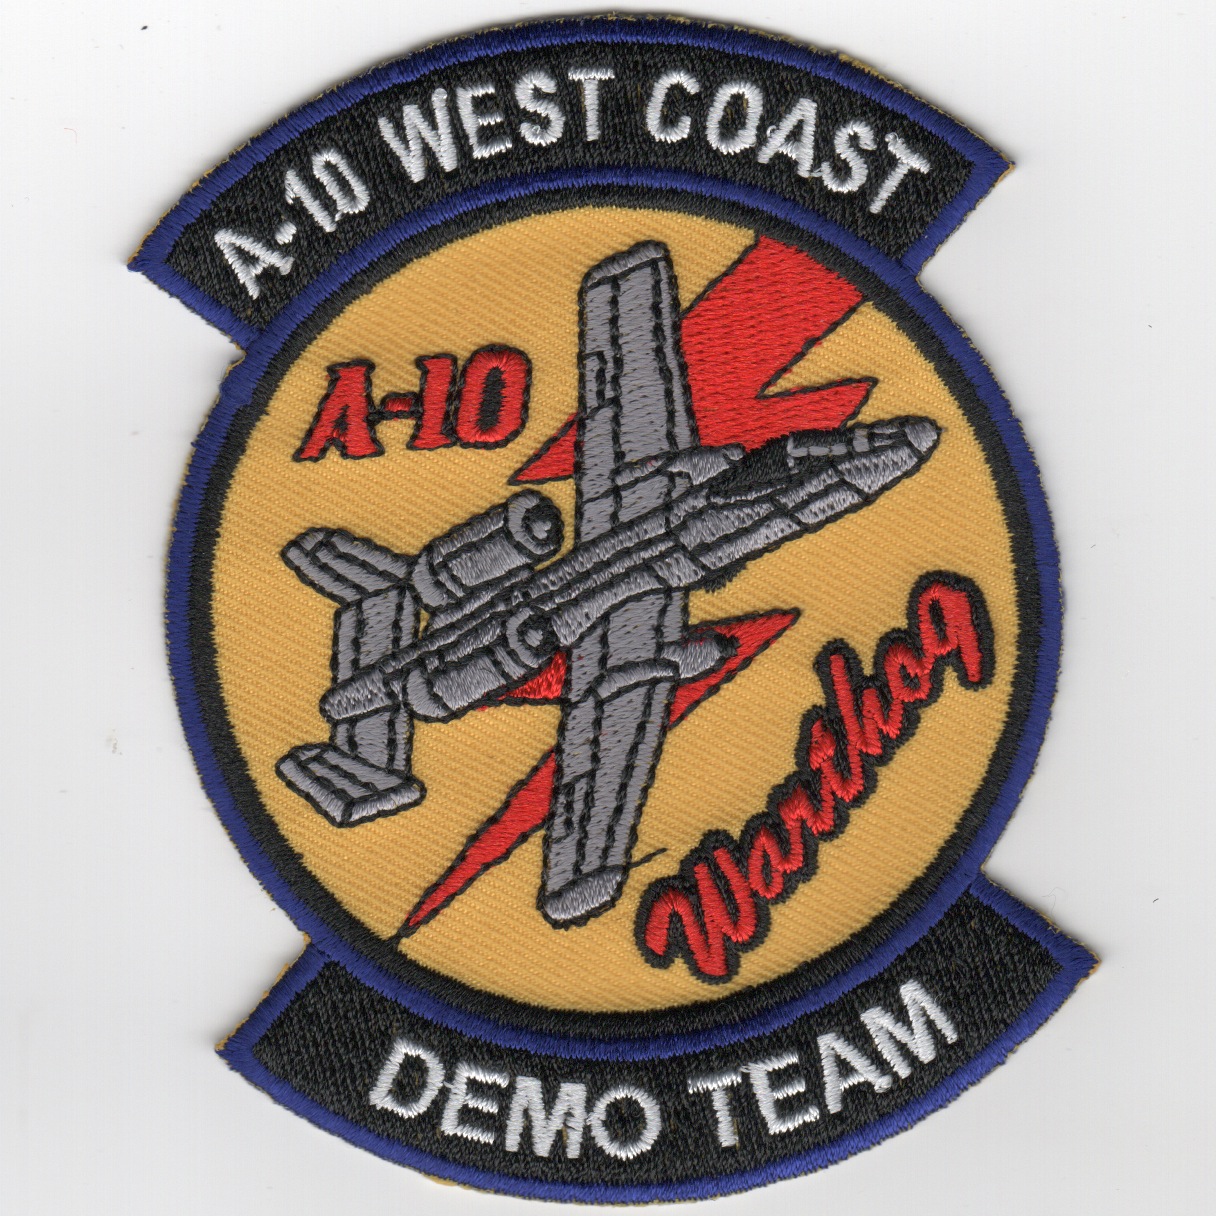 A-10 WEST Coast Demo Team (2 Tabs)